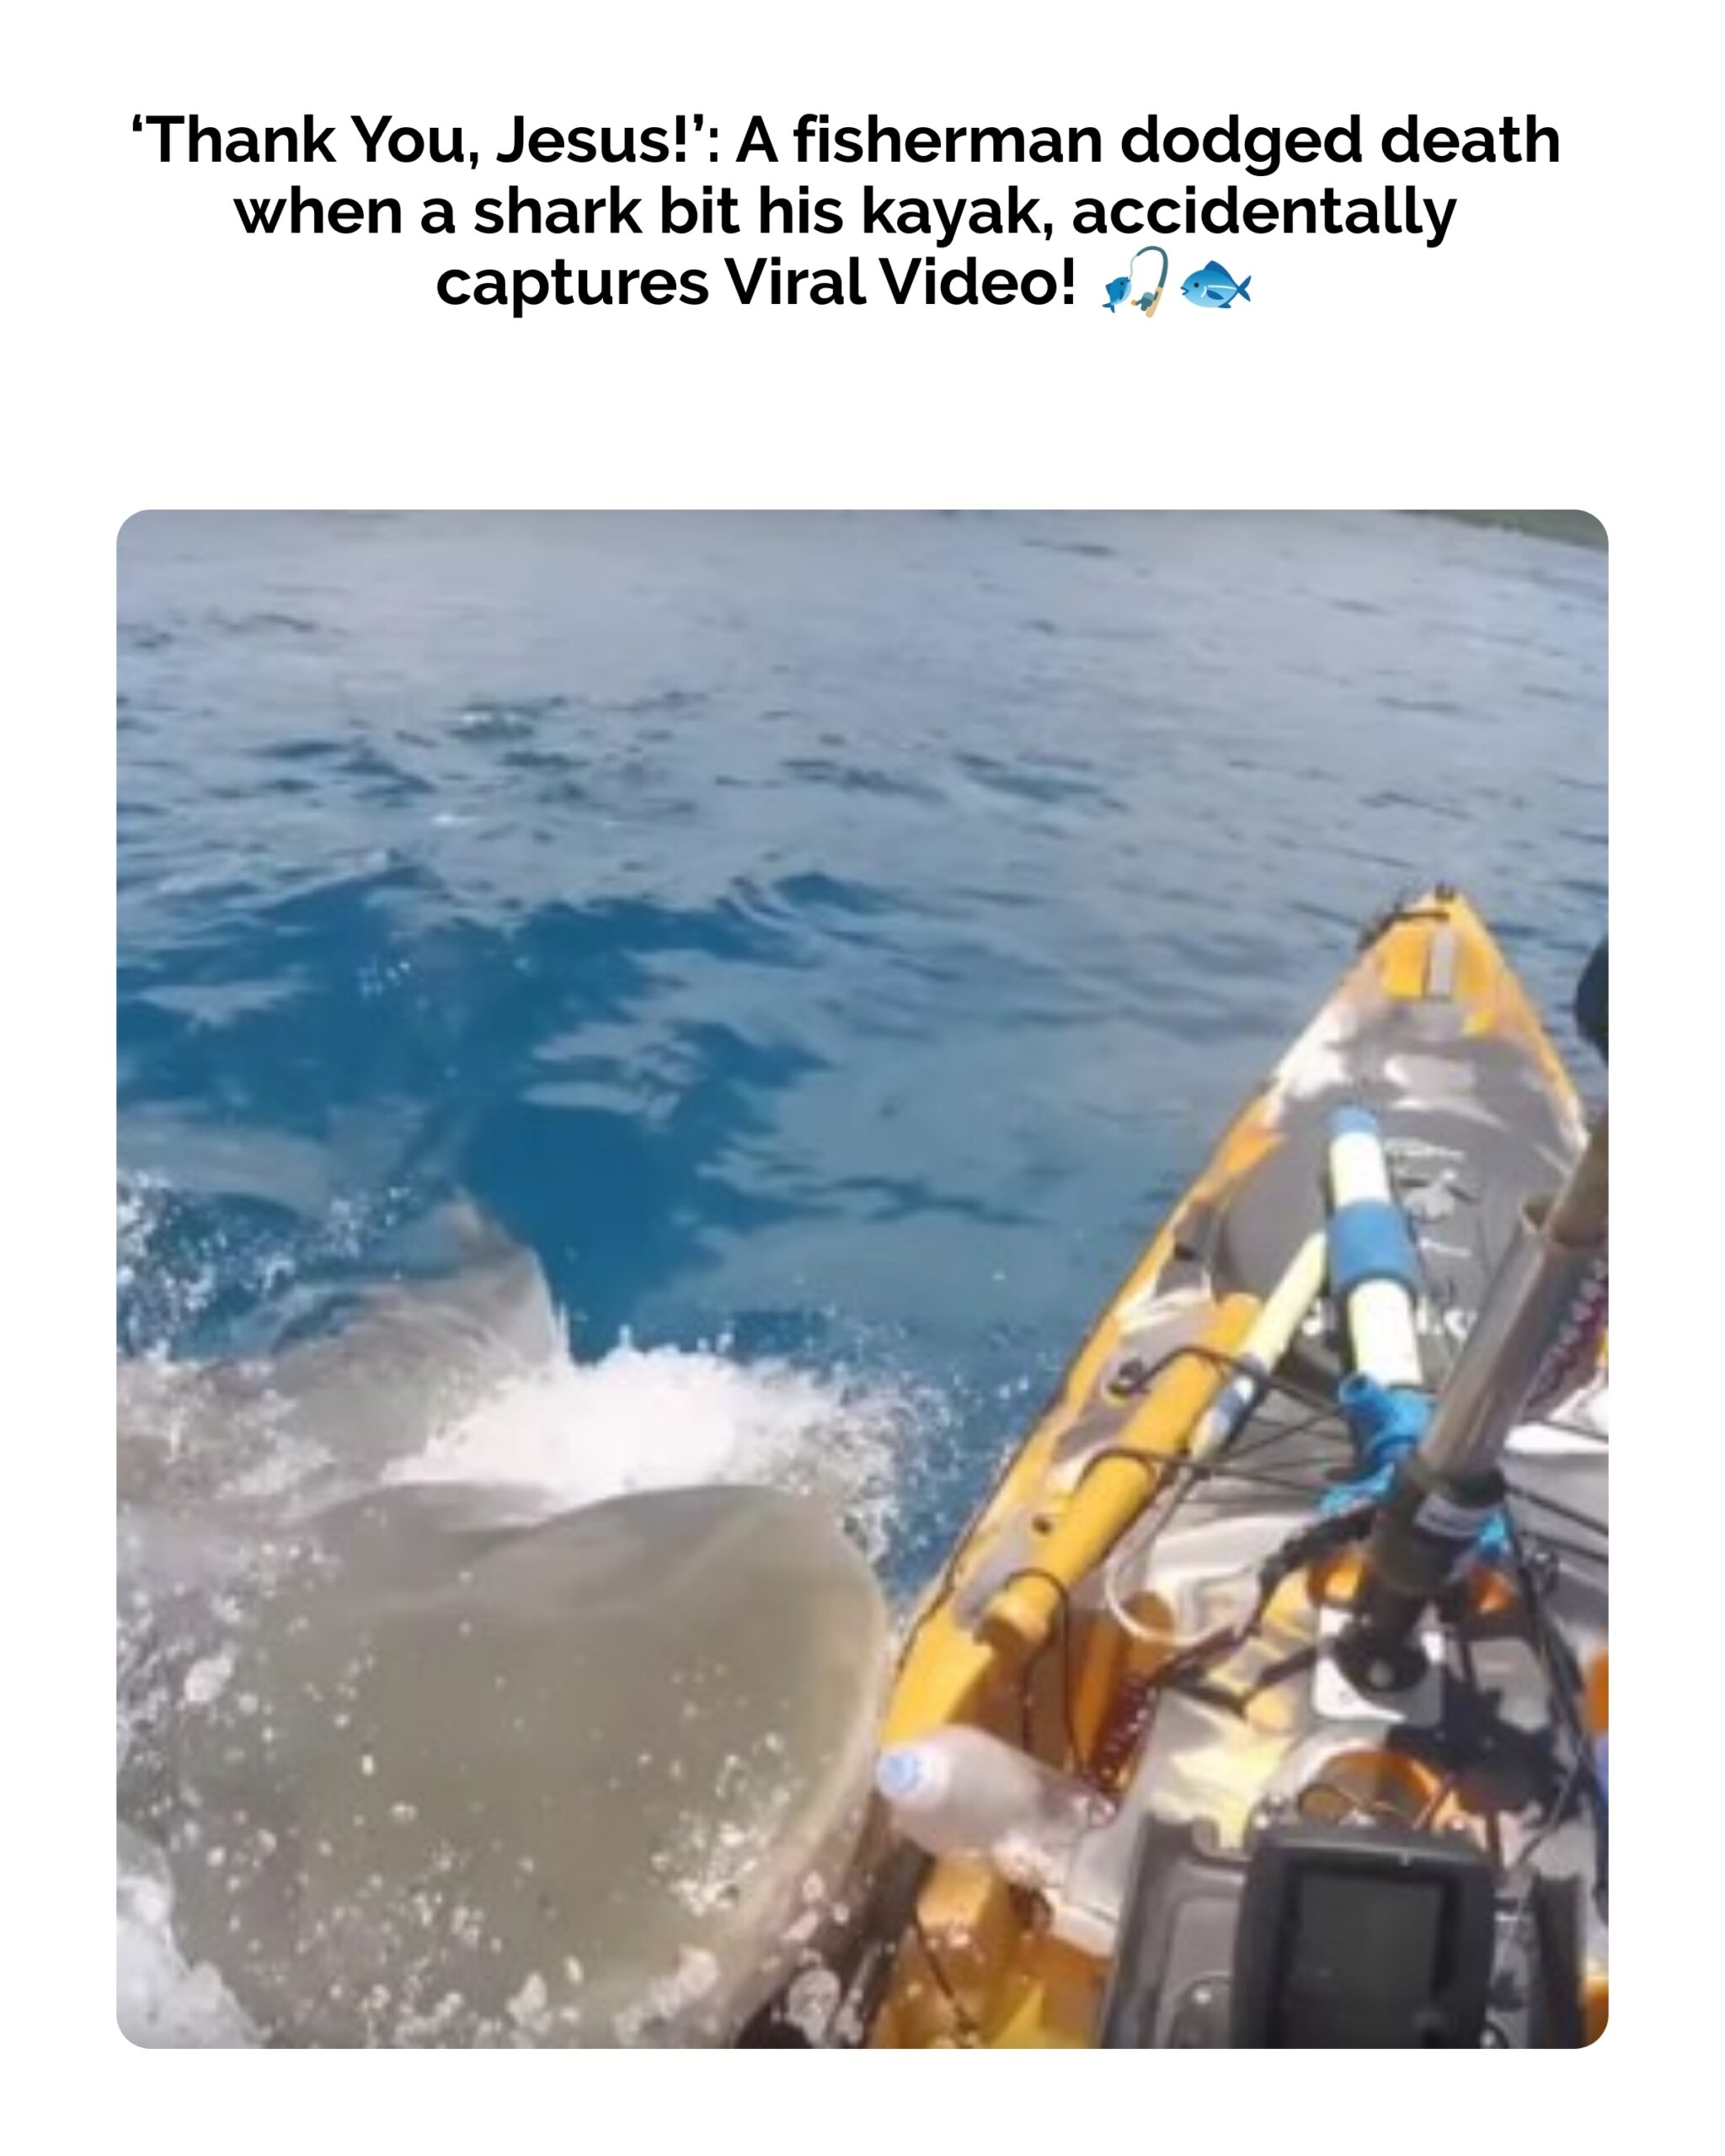 ‘Thank You, Jesus!’: Fisherman Narrowly Escapes Kayak-Chomping Shark, Accidentally Captures Viral Video